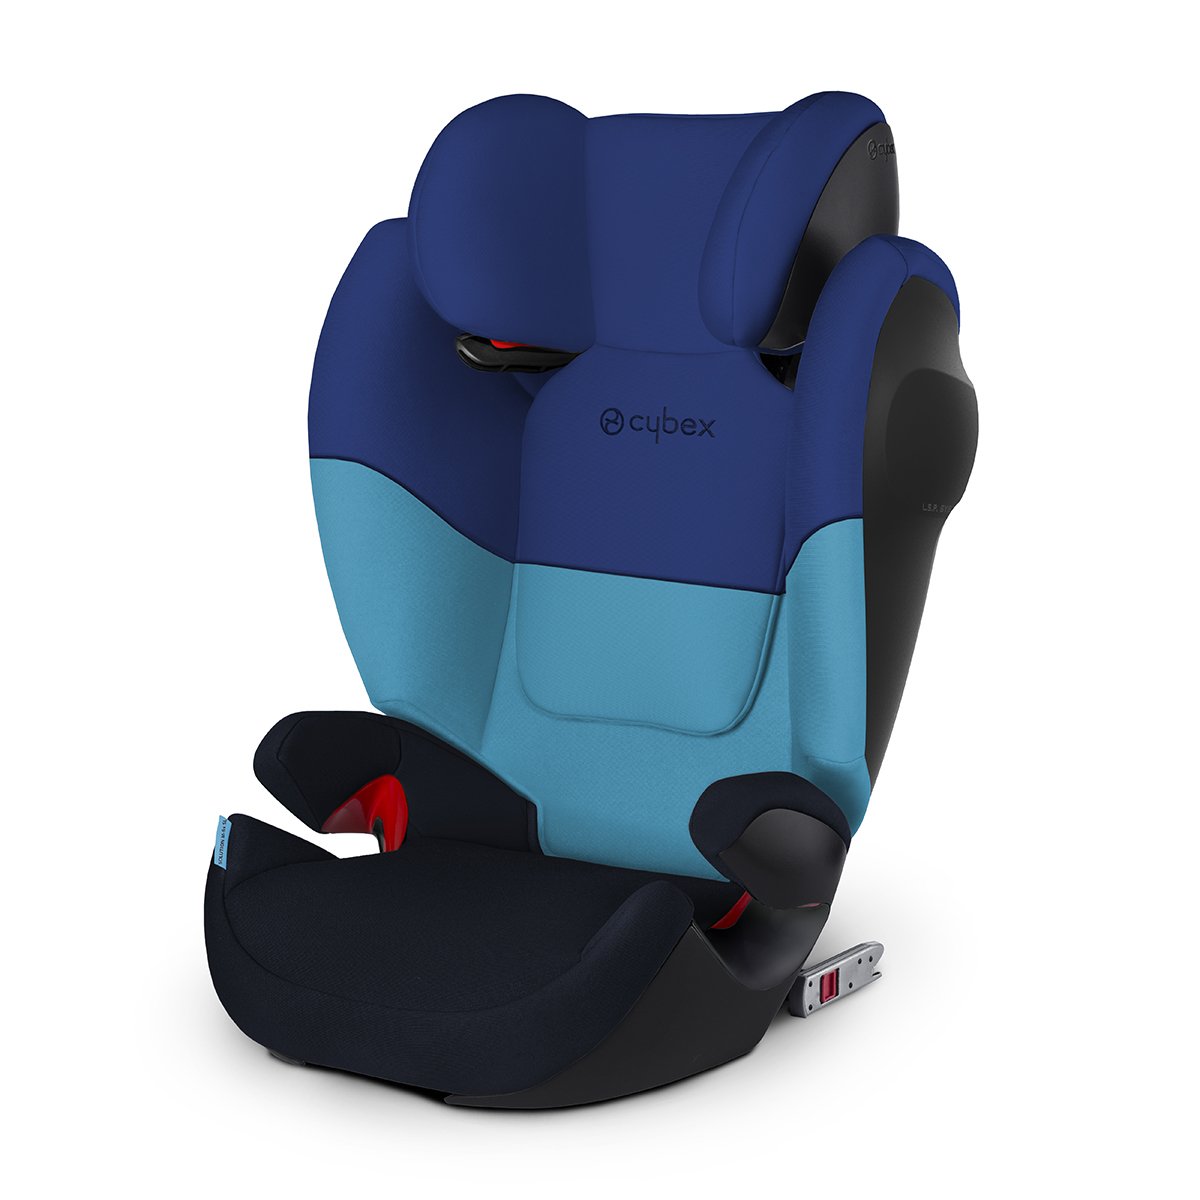 Cybex Child Car Seat, Blue Moon